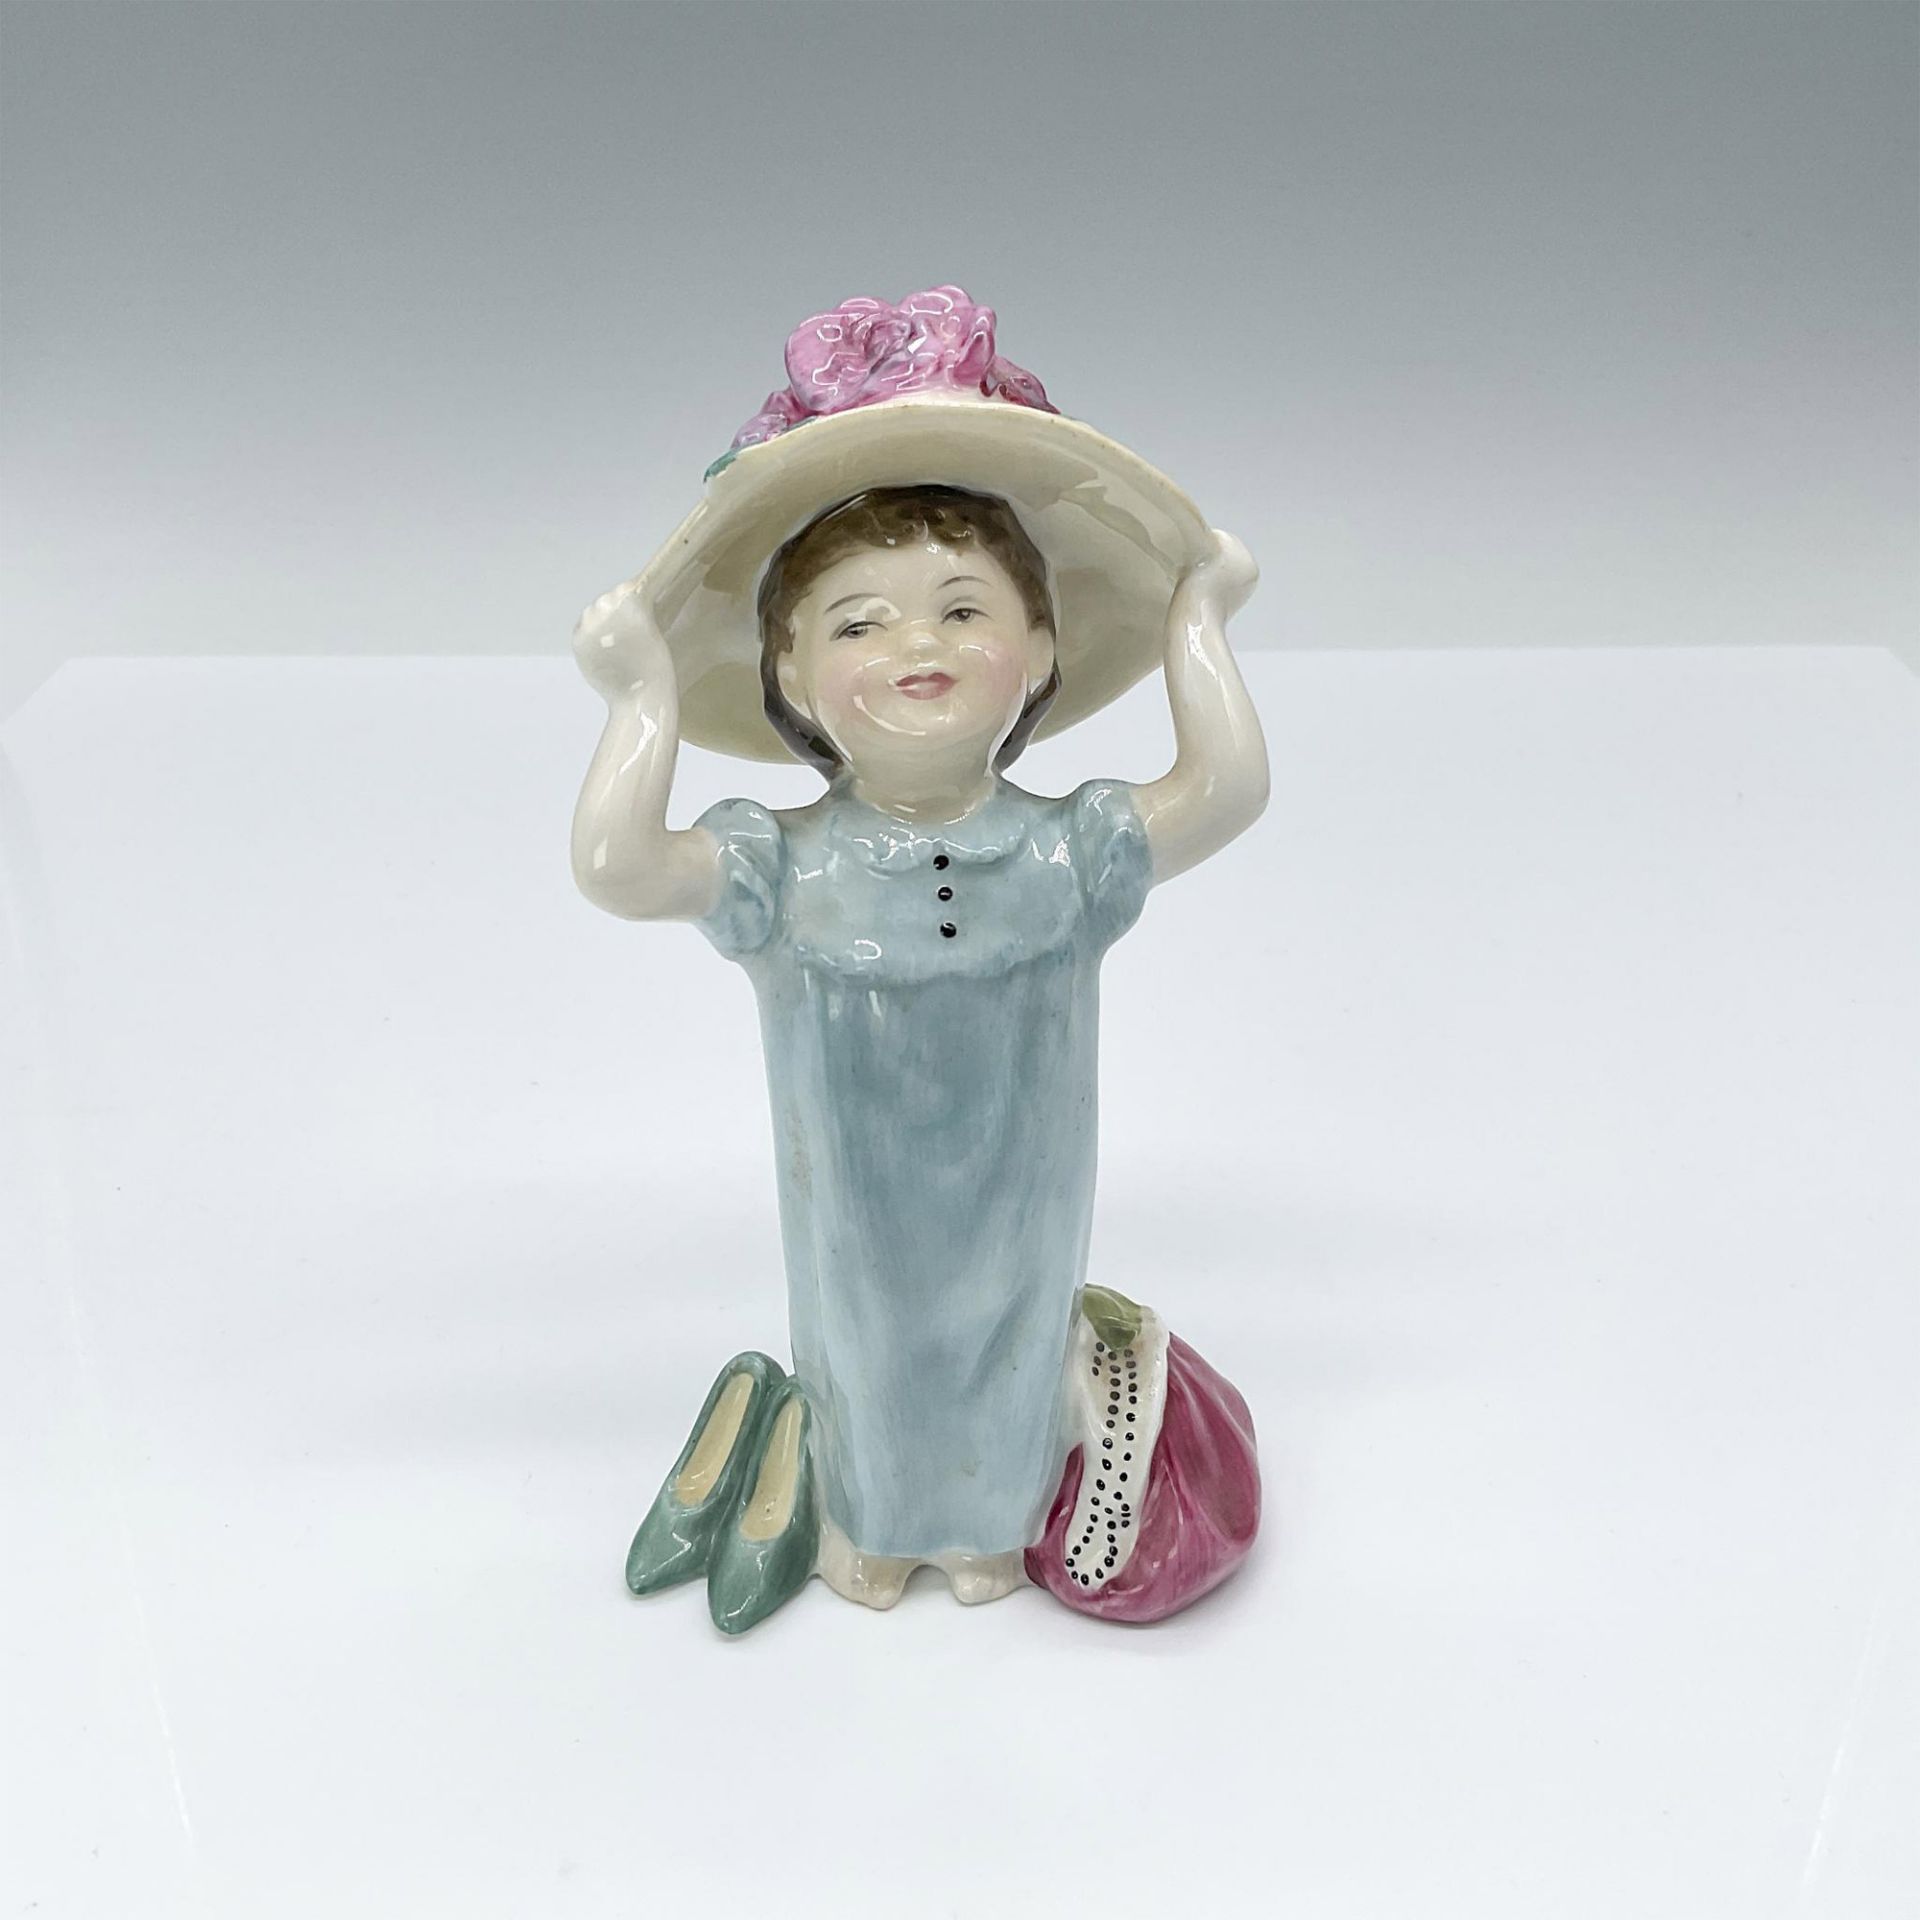 Make Believe - HN2225 - Royal Doulton Figurine